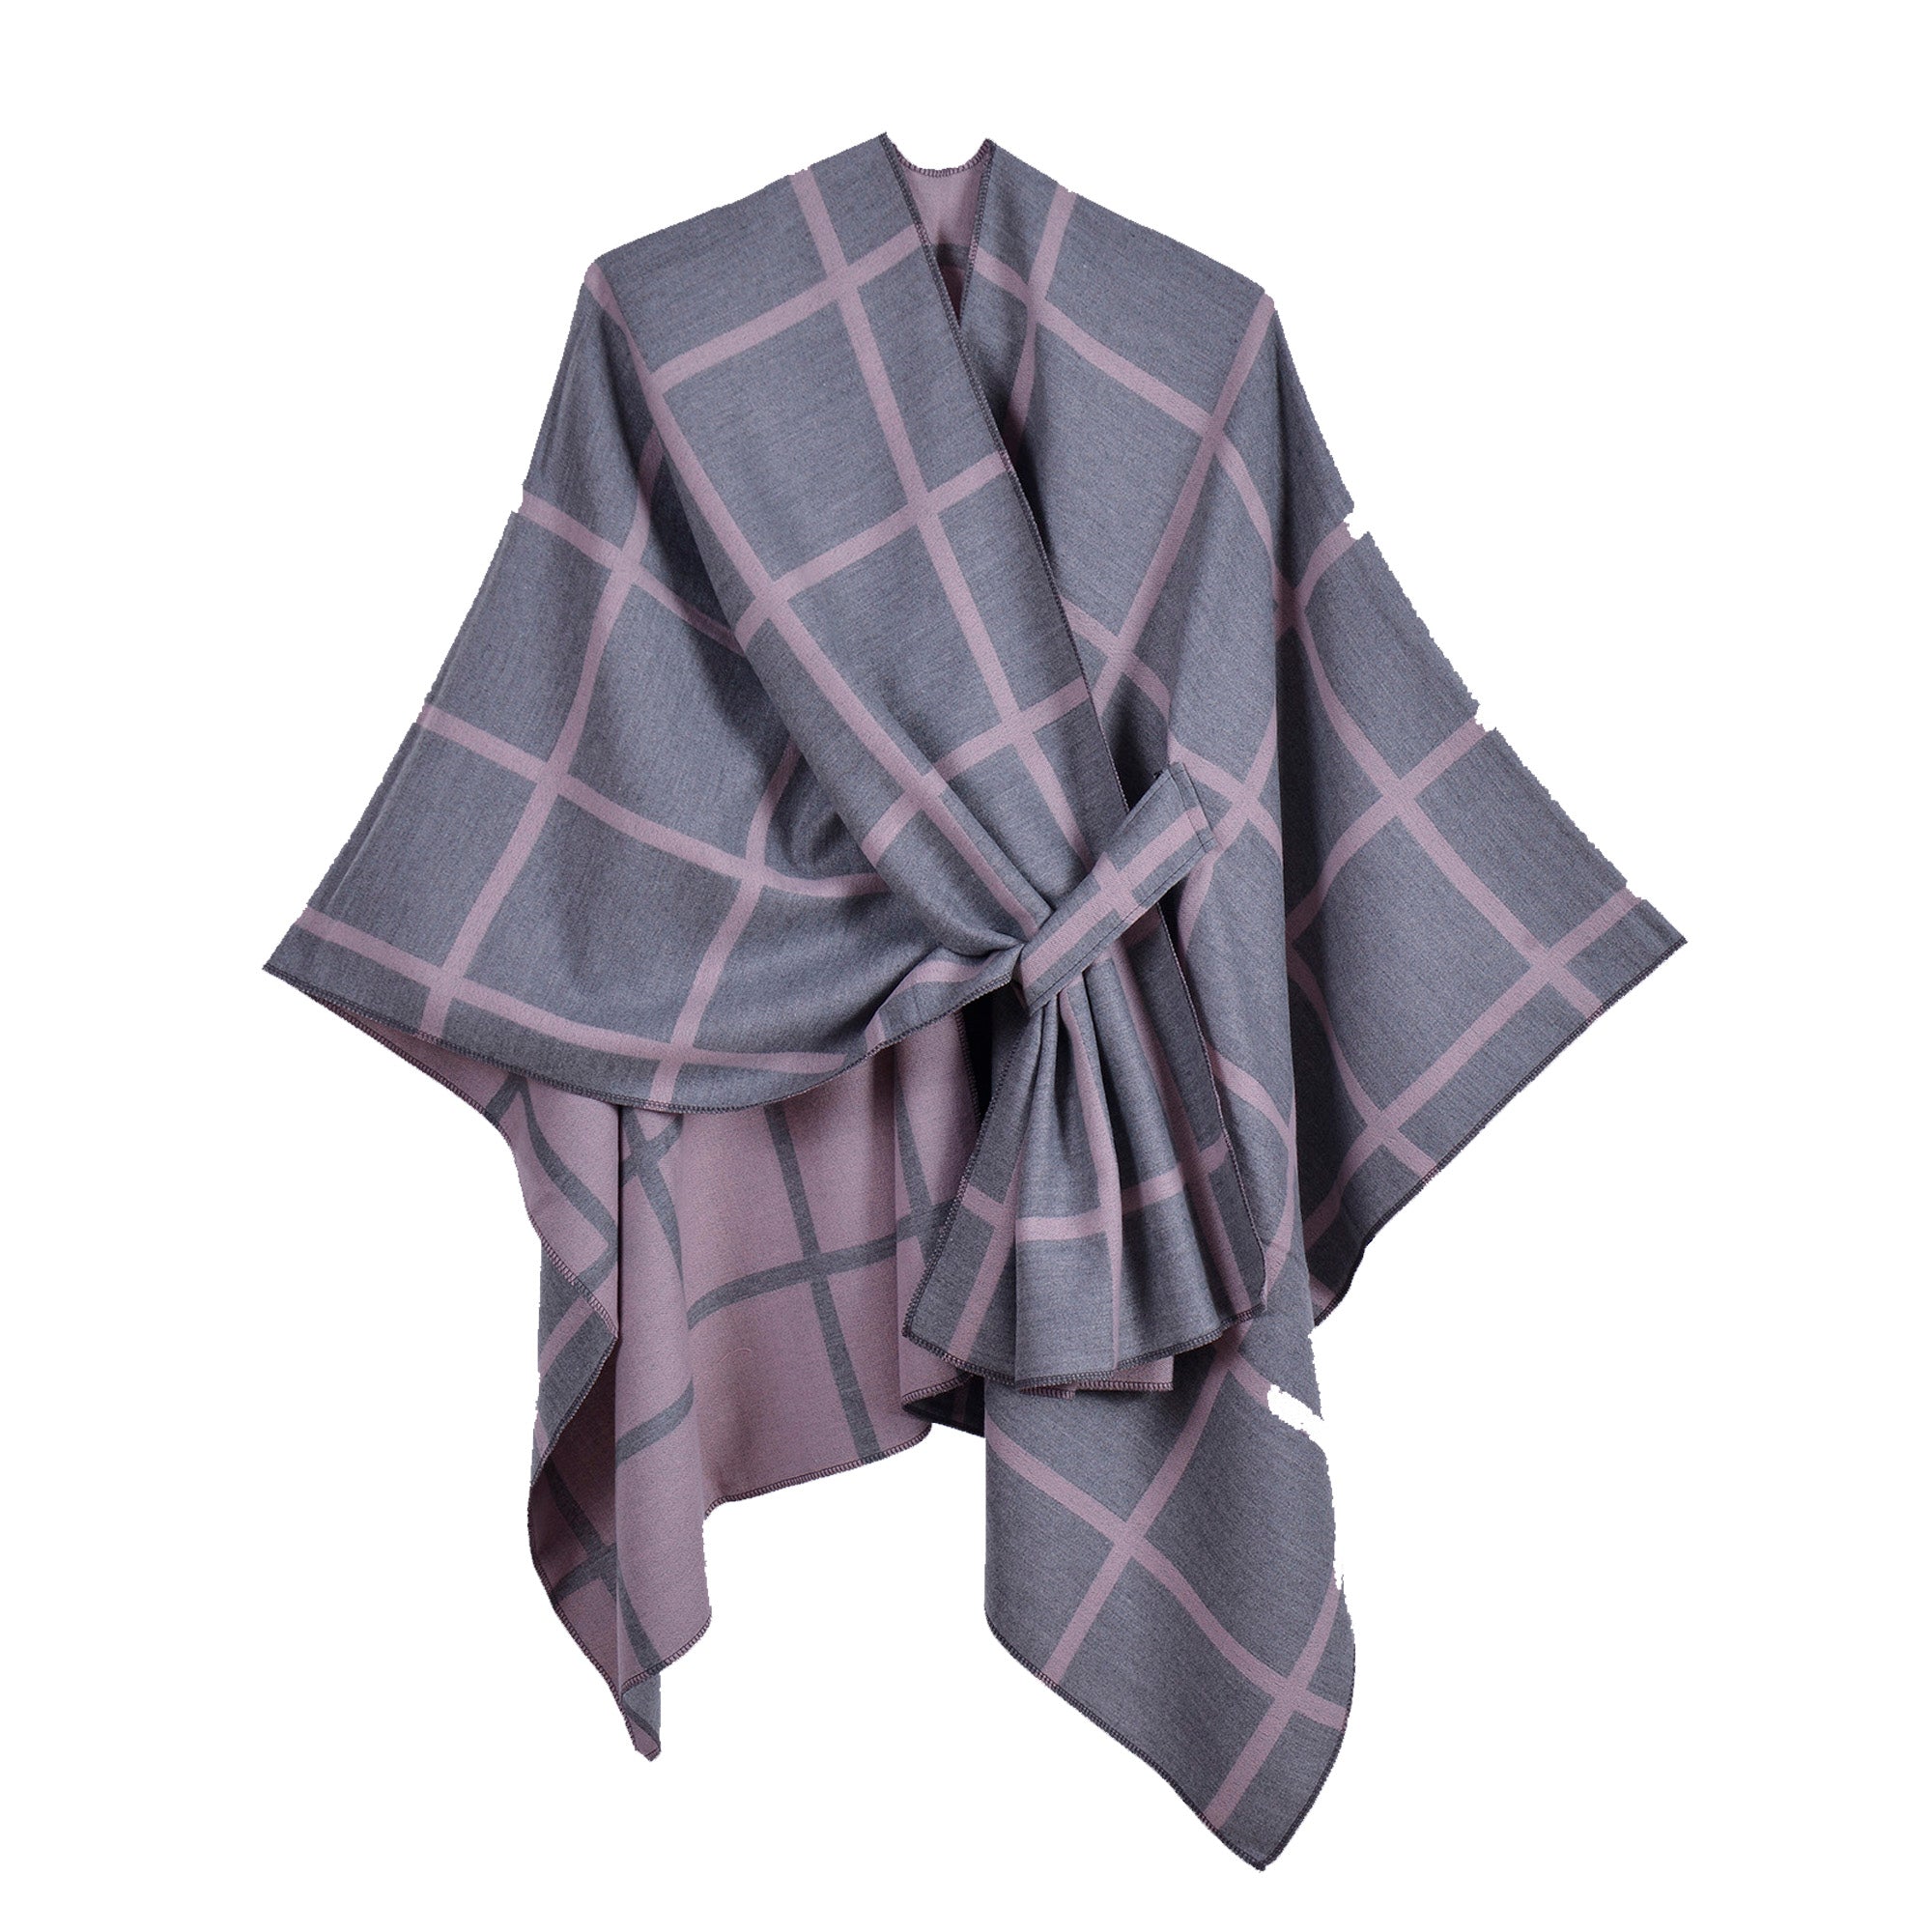 New plaid shawl with bar gray pink